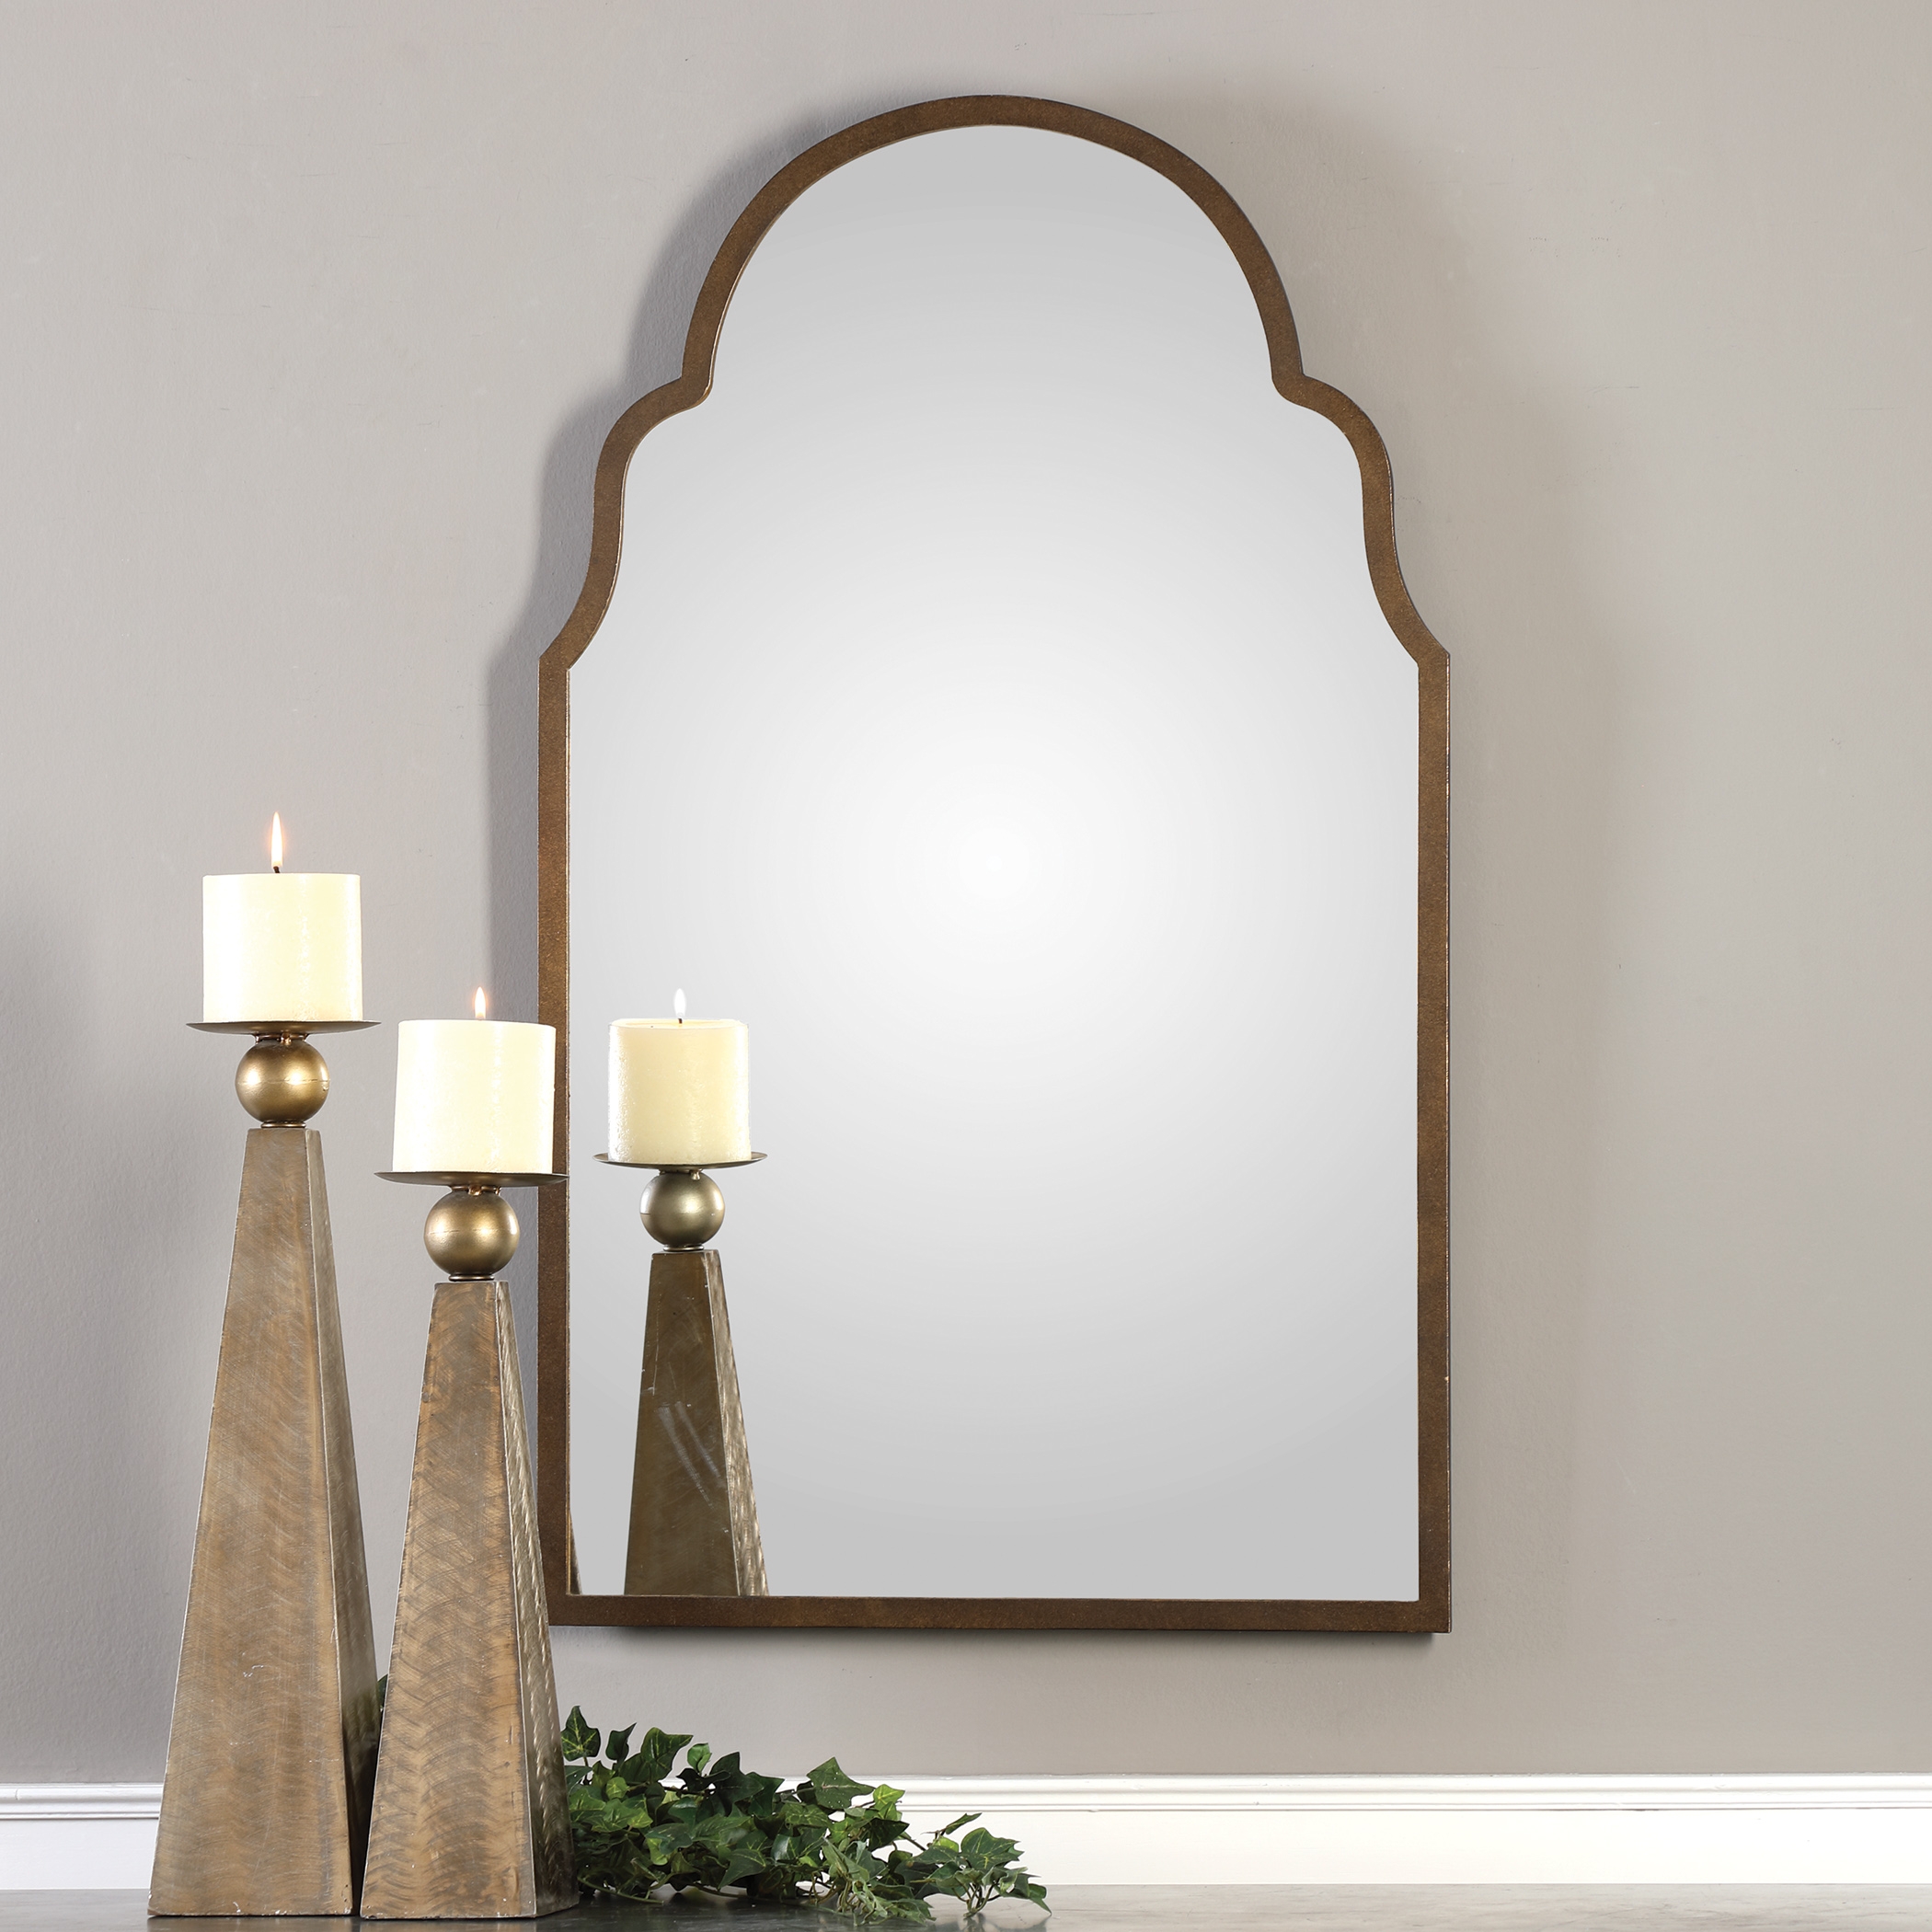 Brayden Arch Metal Mirror - Image 4